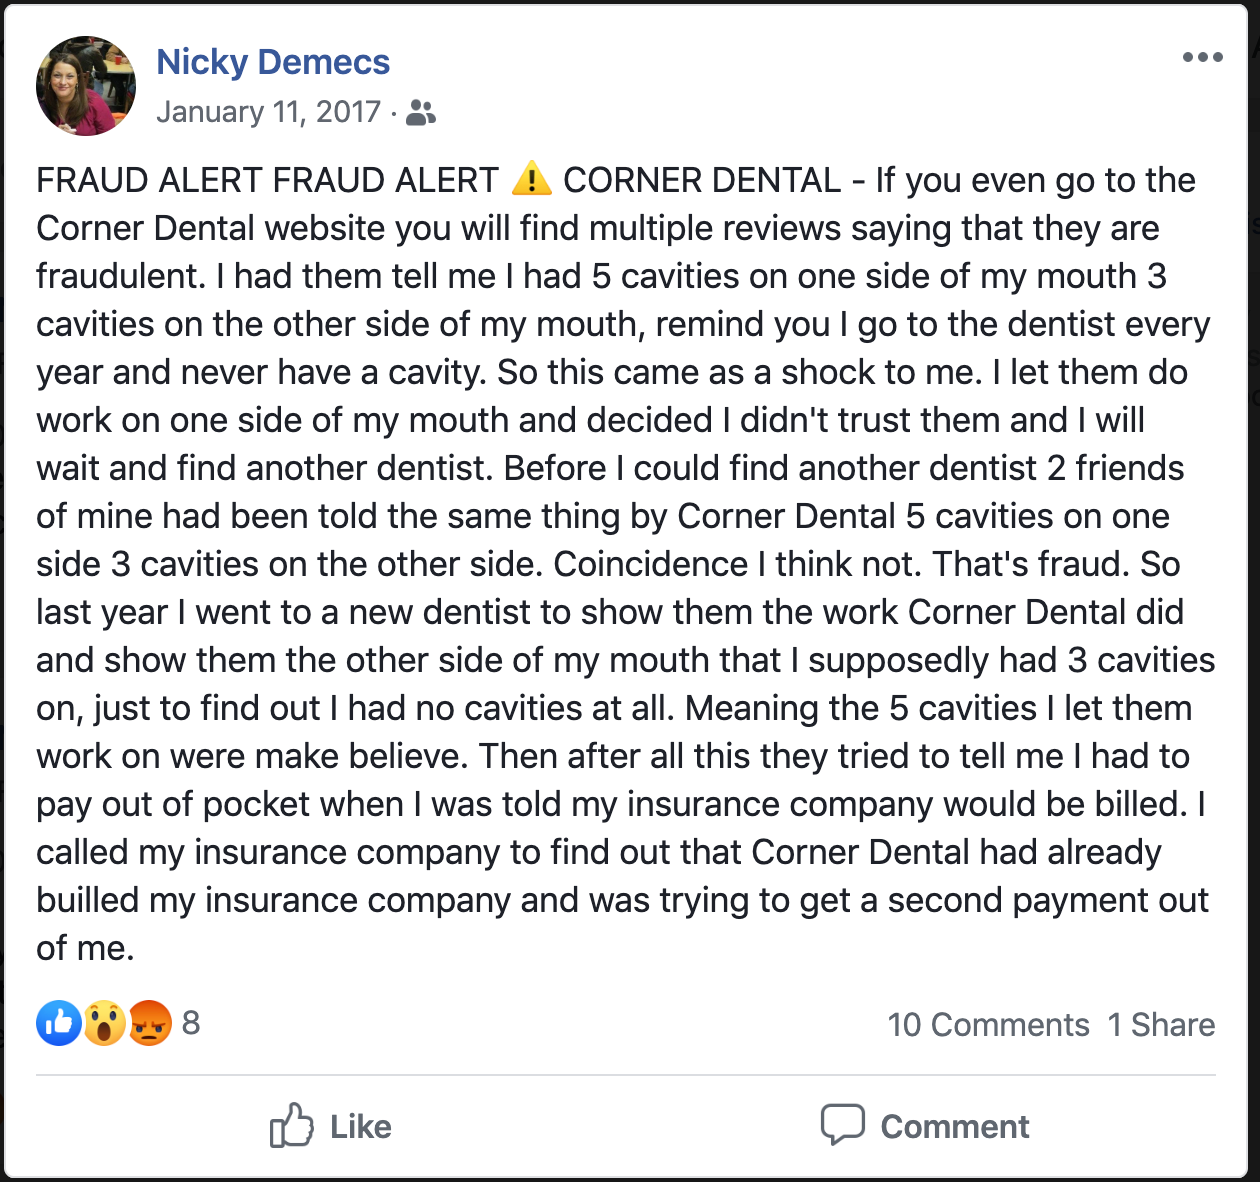 Nicky Demecs' Facebook review of Corner Dental